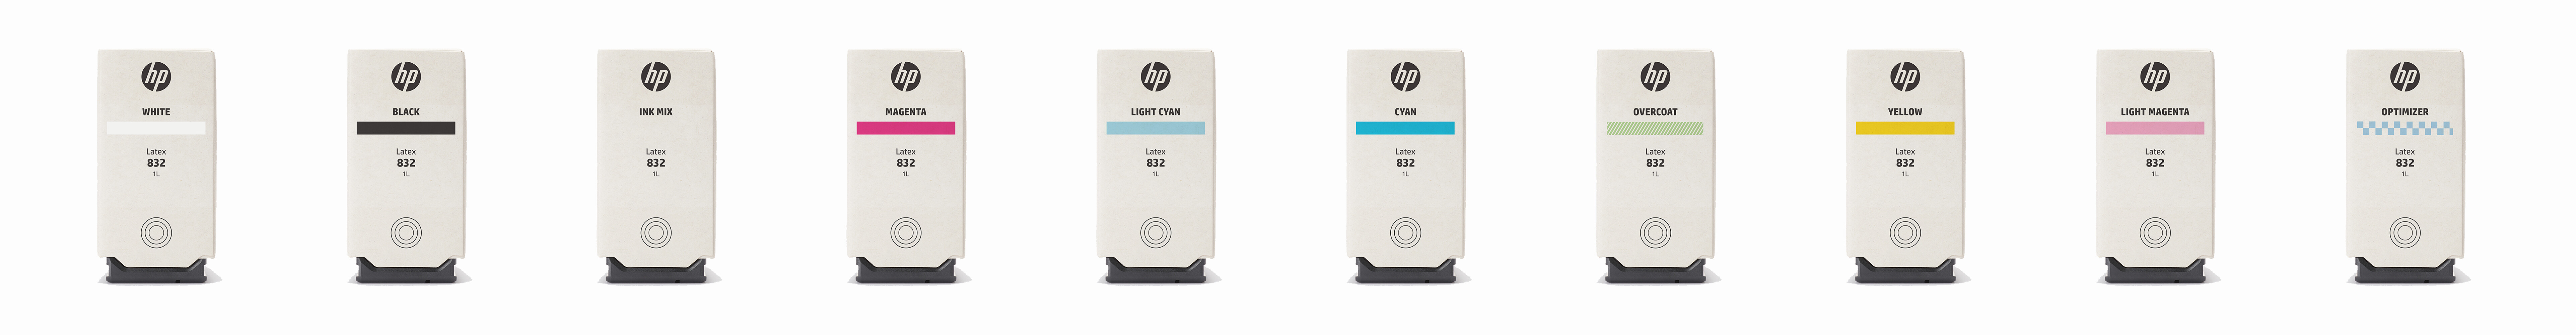 HP Latex 630 Series cartridges